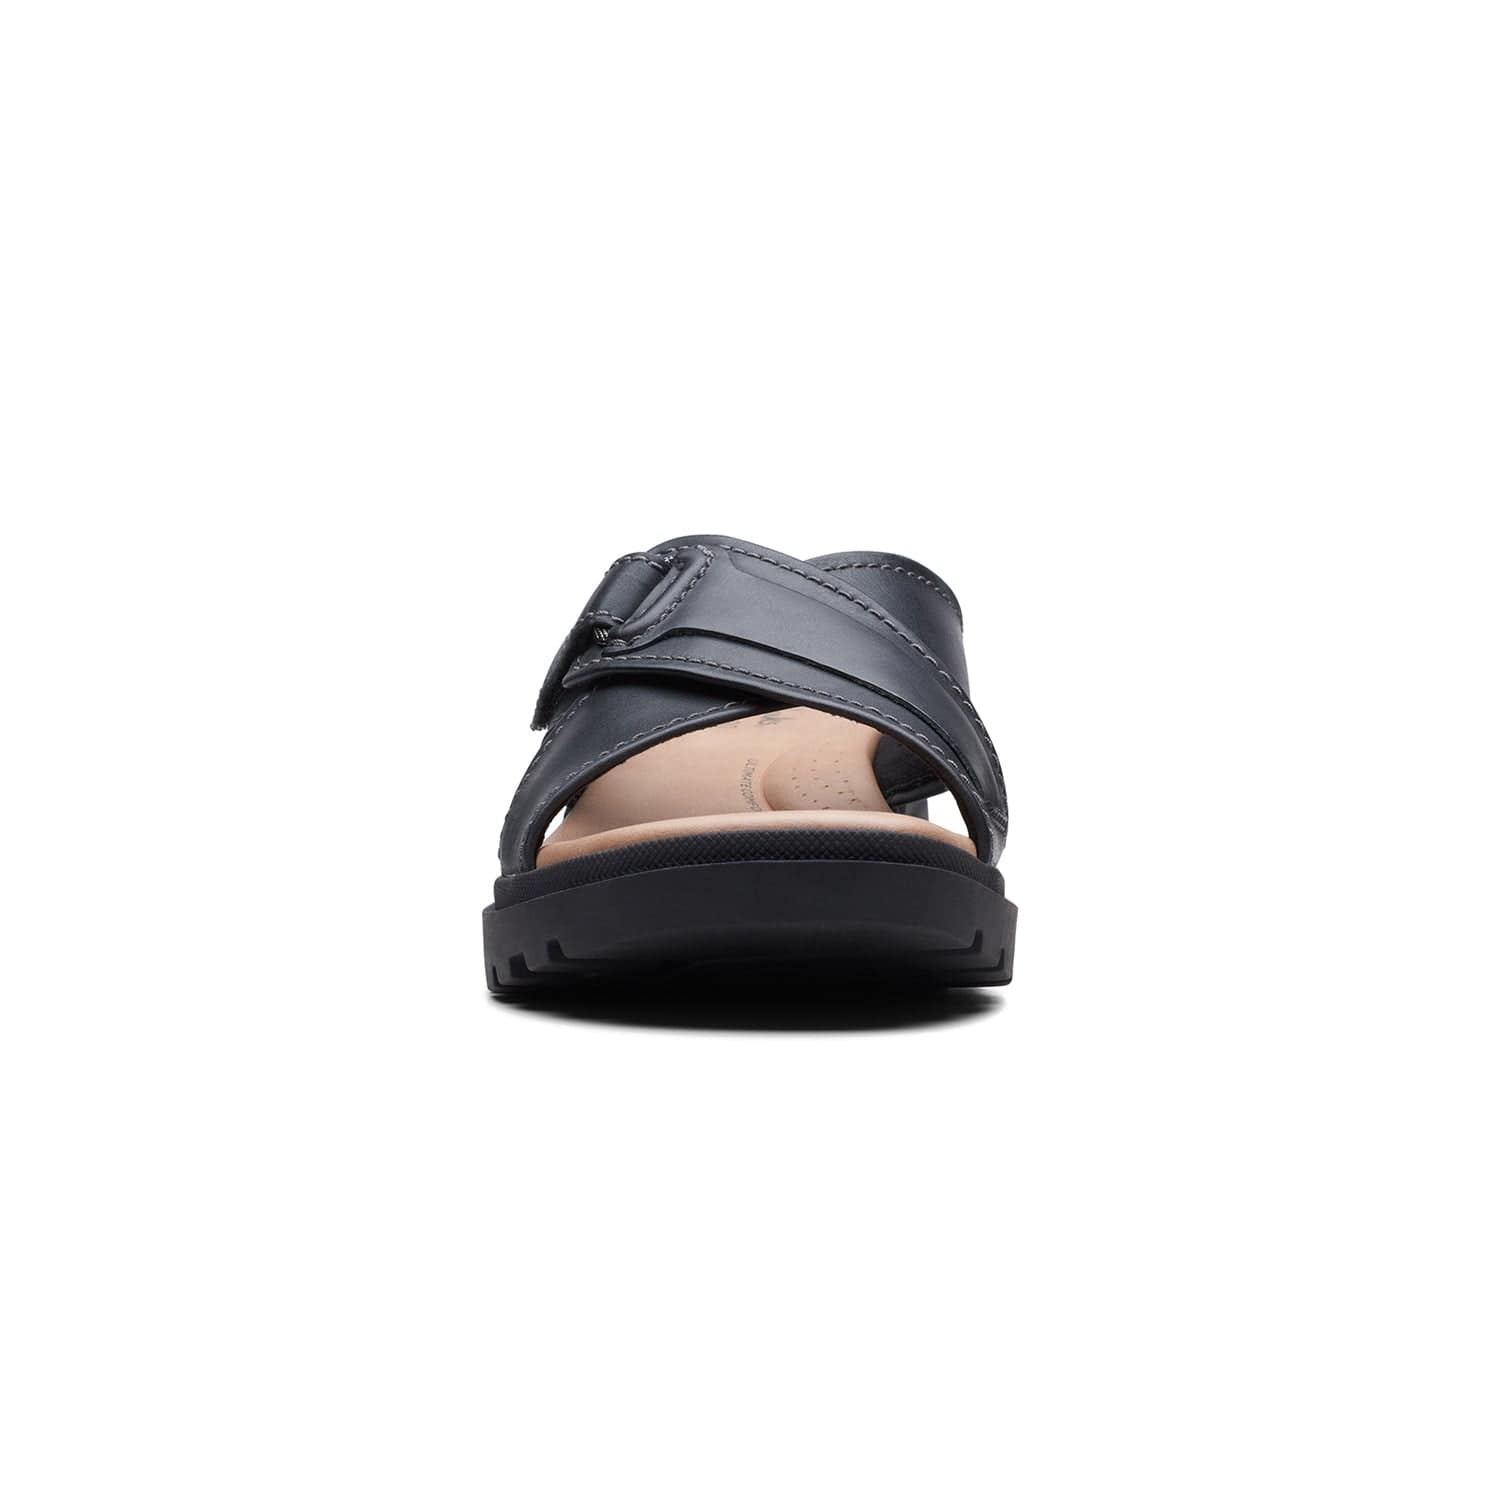 Clarks Coast Cross - Sandals - Black Leather - 261717325 - E Width (Wide Fit)